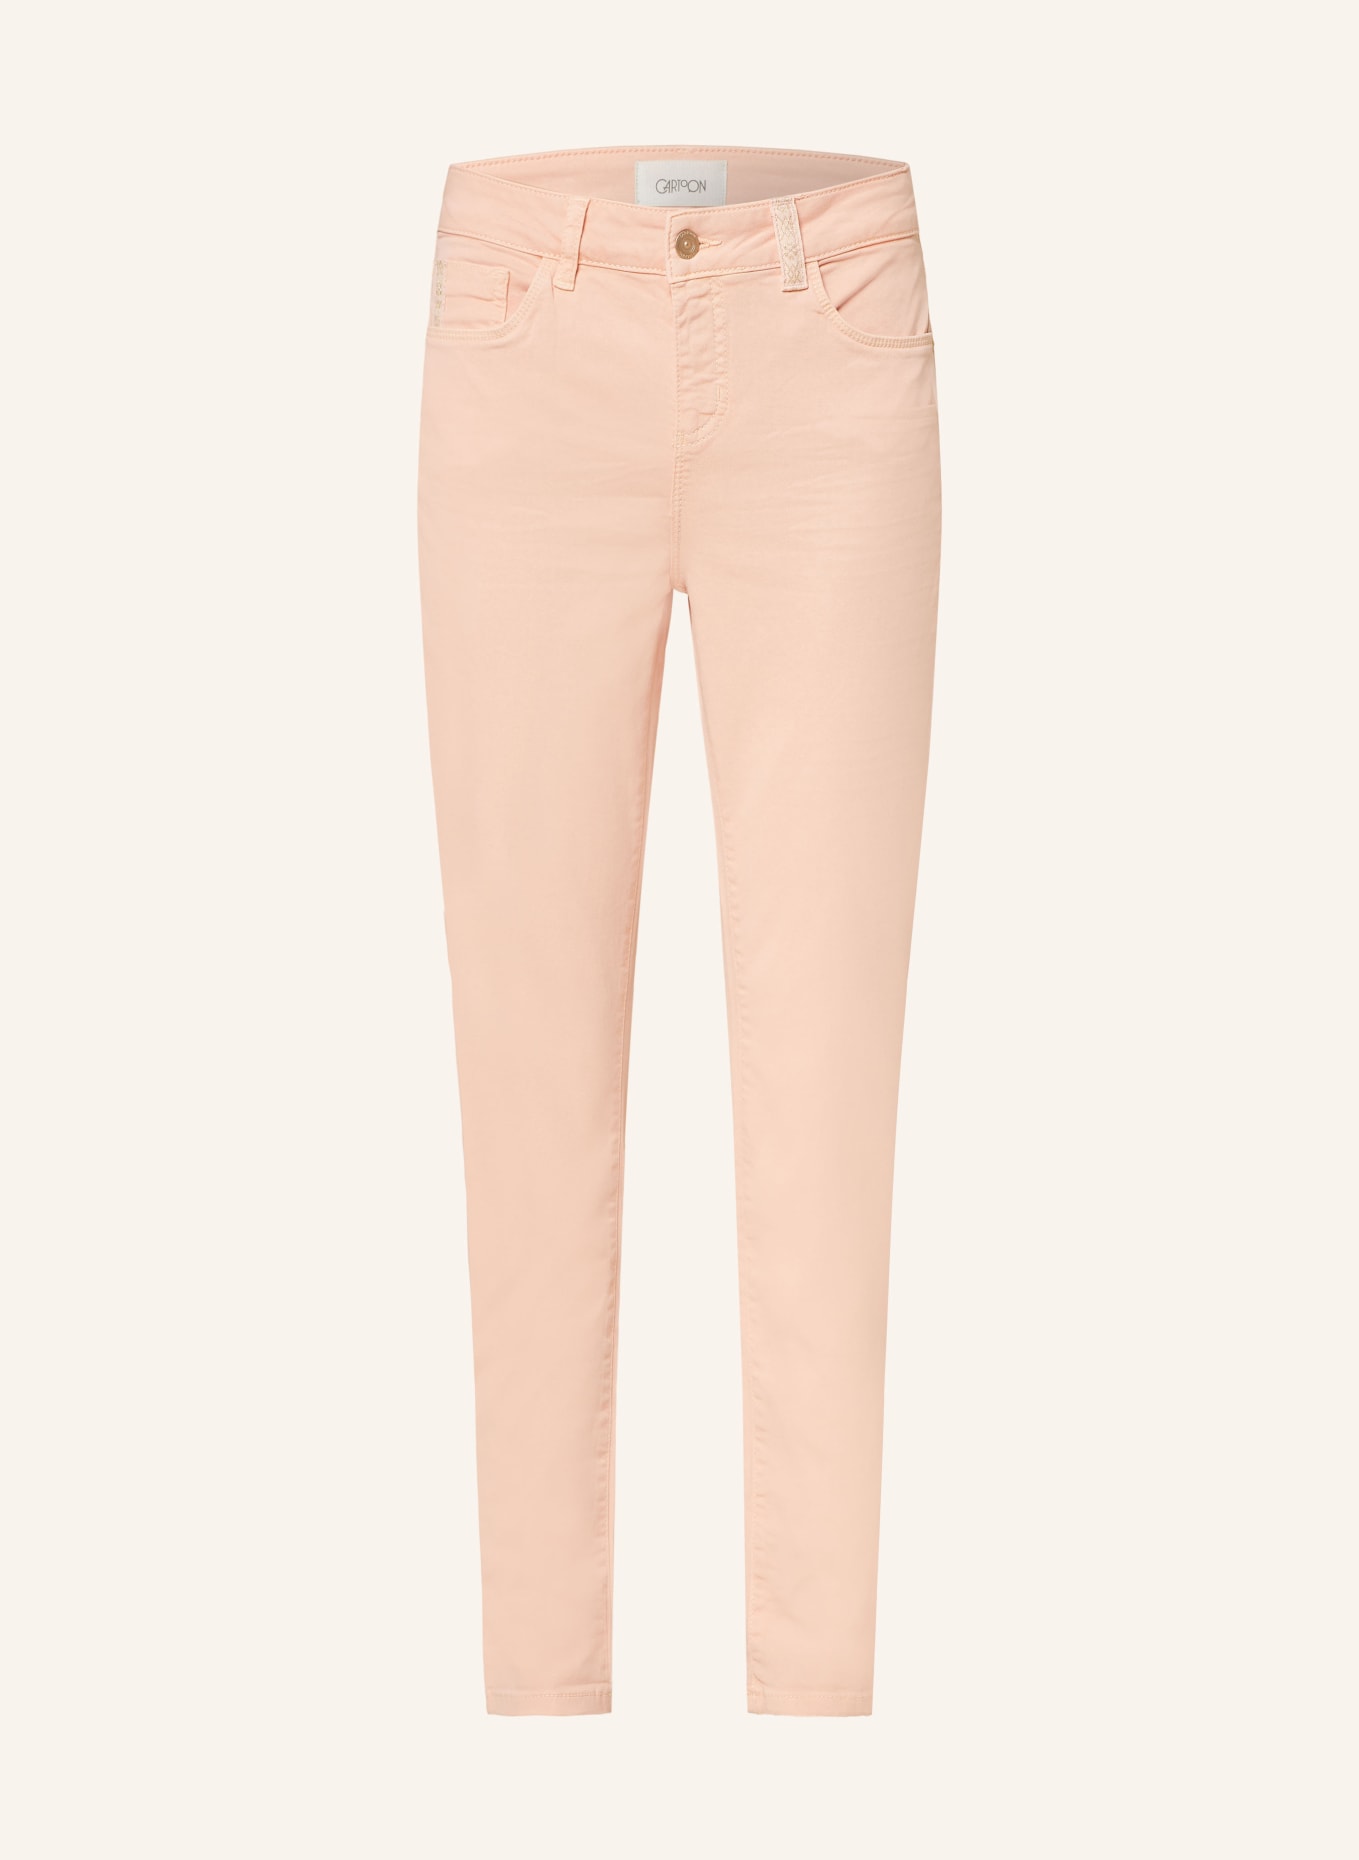 CARTOON Jeans, Farbe: 4647 Peach Parfait (Bild 1)